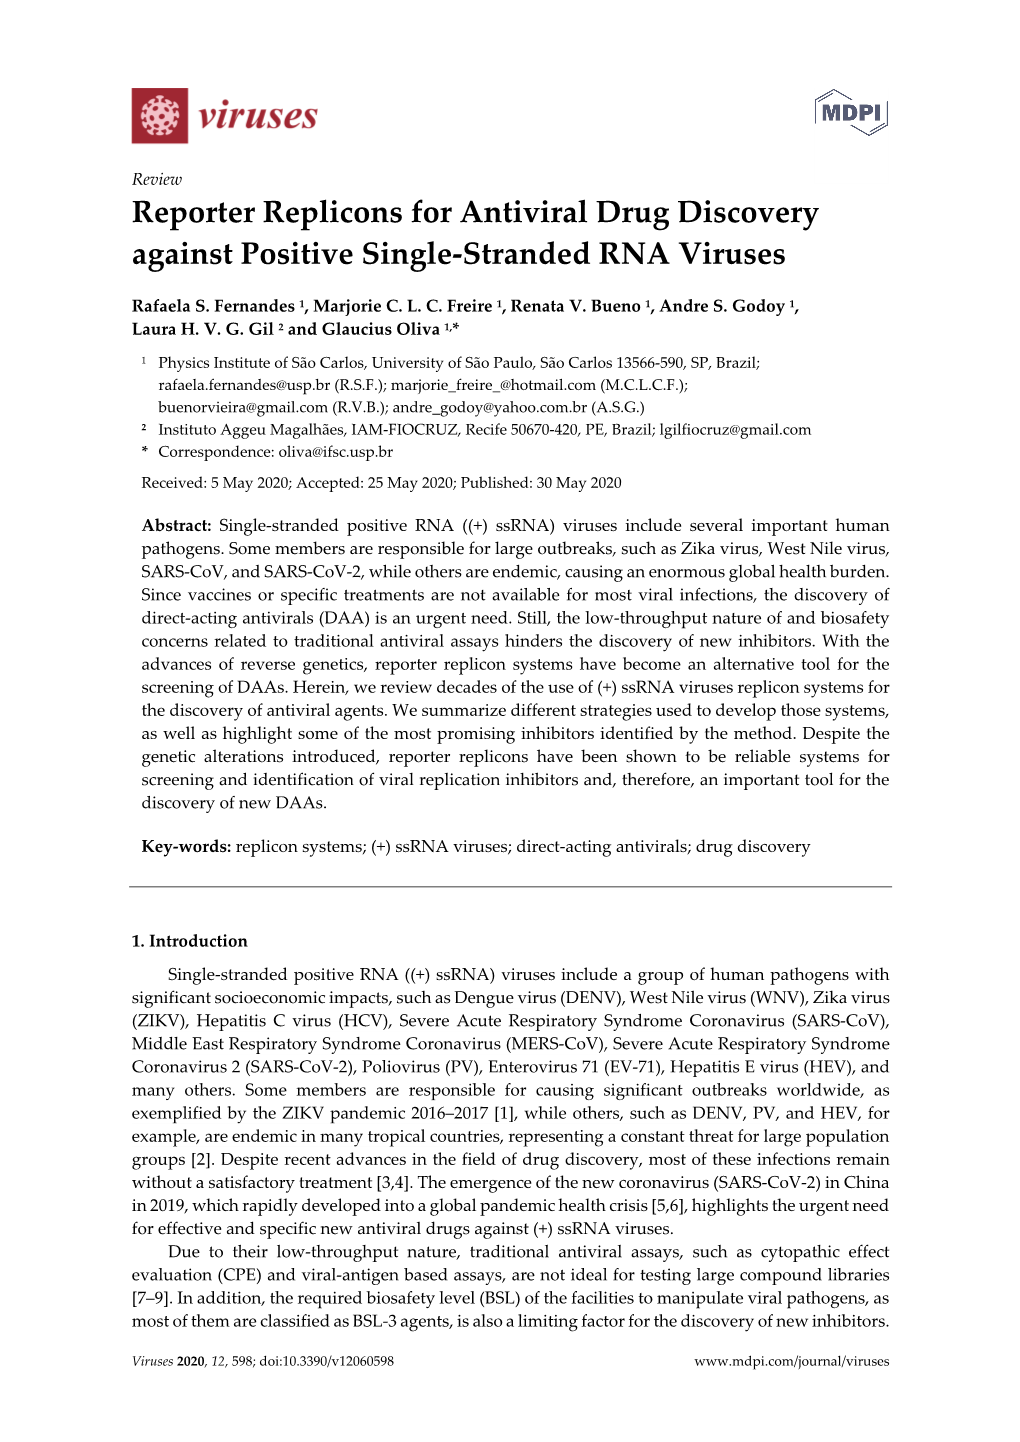 Reporter Replicons for Antiviral Drug Discovery Against Positive Single-Stranded RNA Viruses